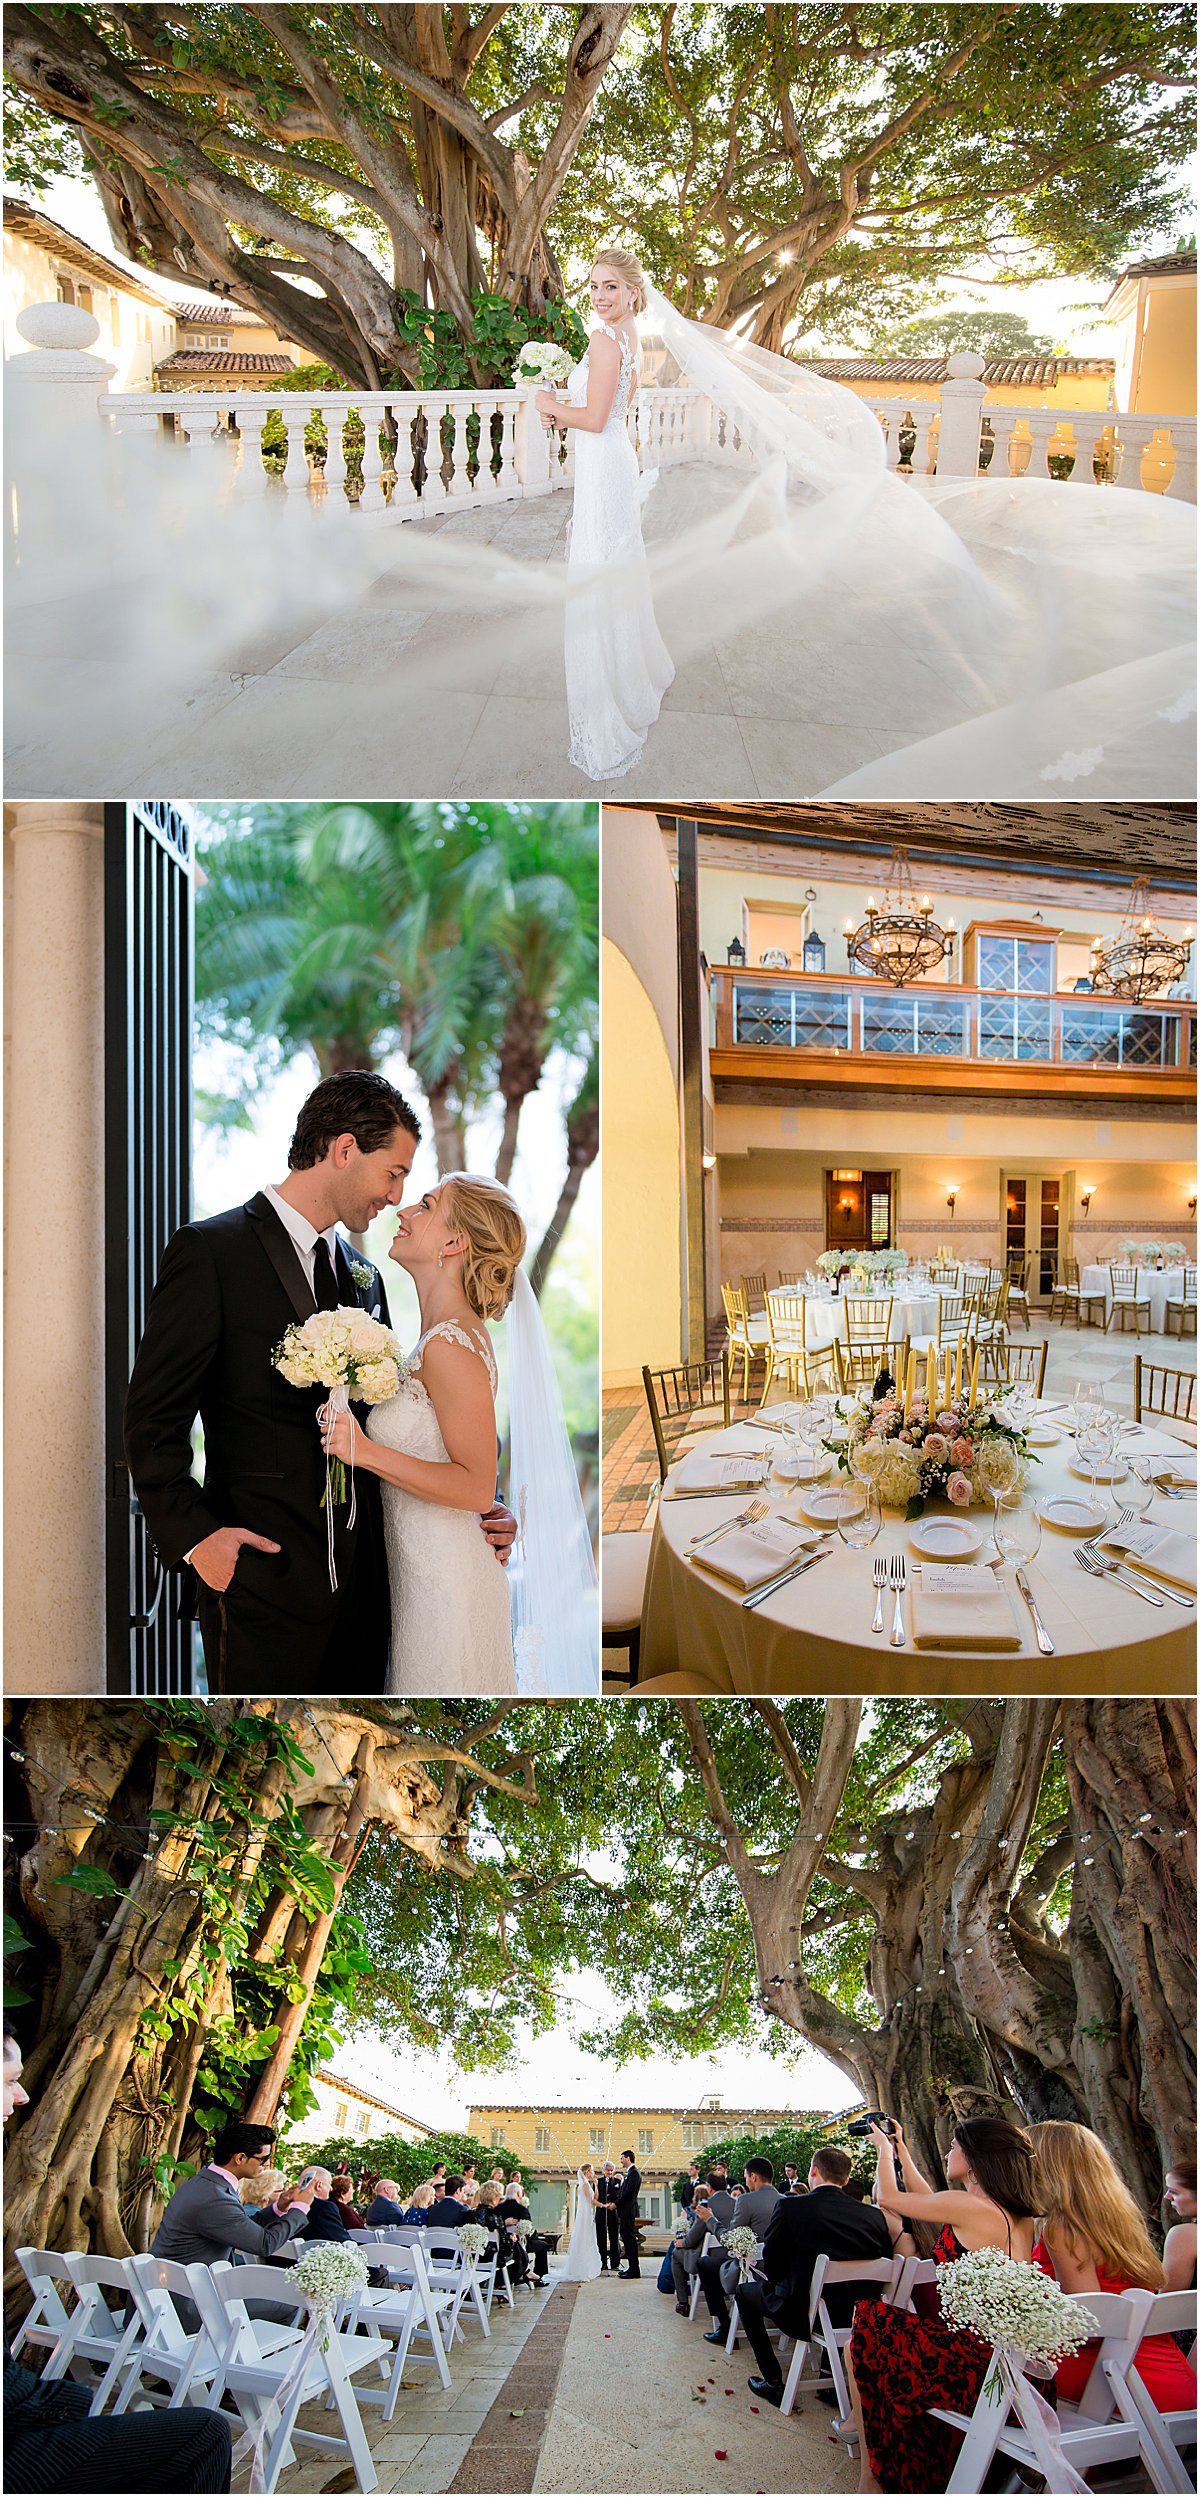 Addison Boca Raton | Top Palm Beach Wedding Venue | Married in Palm Beach | www.marriedinpalmbeach.com | Captured Beauty Photography